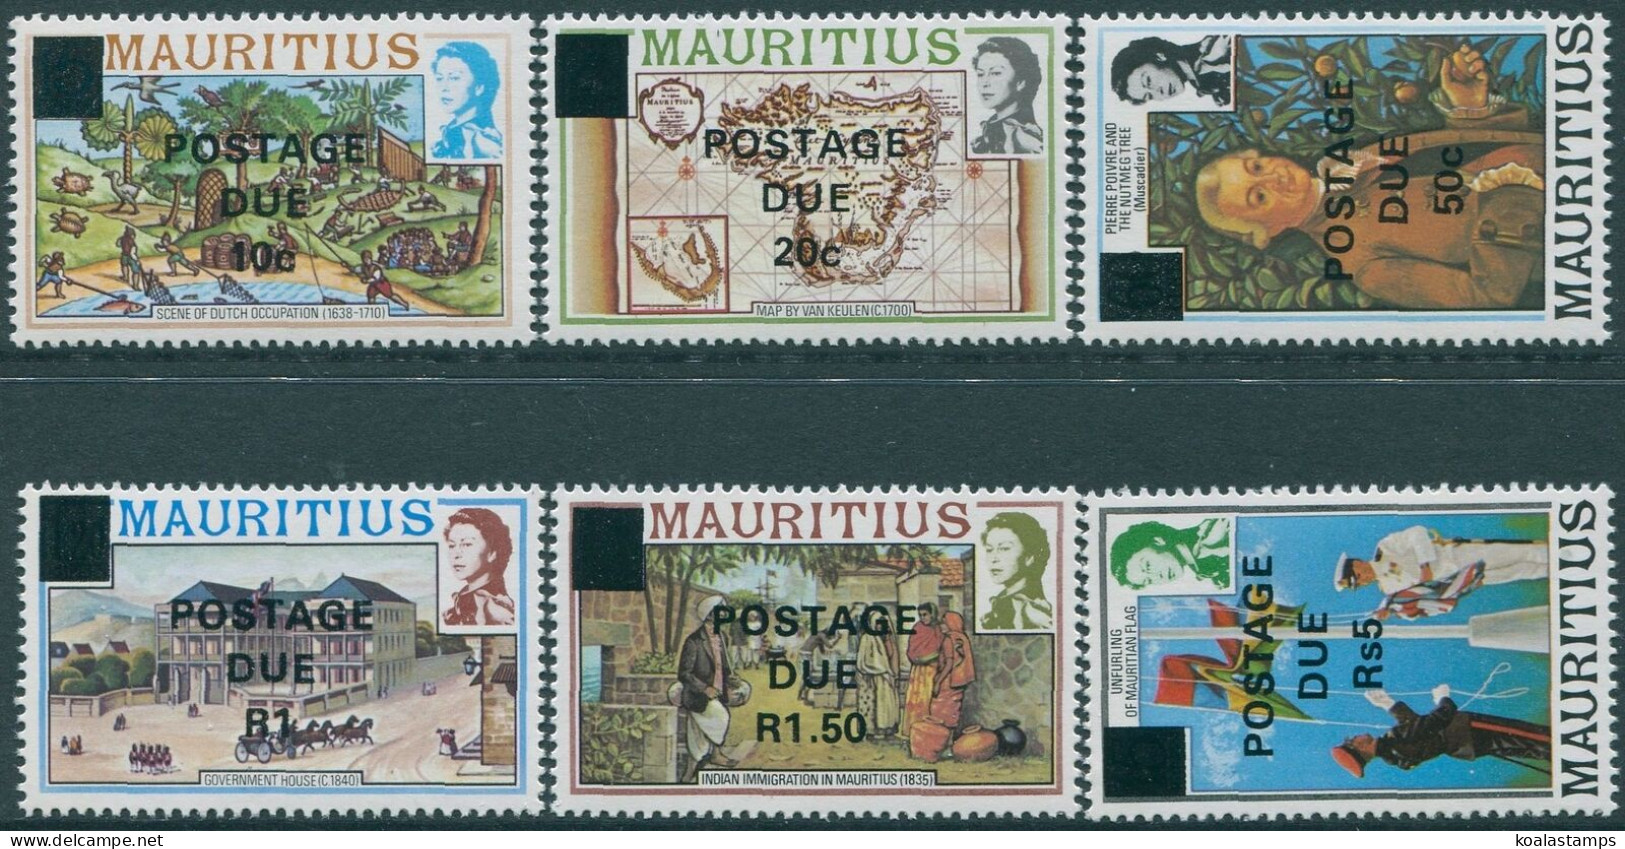 Mauritius Due 1982 SGD14-D19 Postage Dues Set MNH - Mauritius (1968-...)